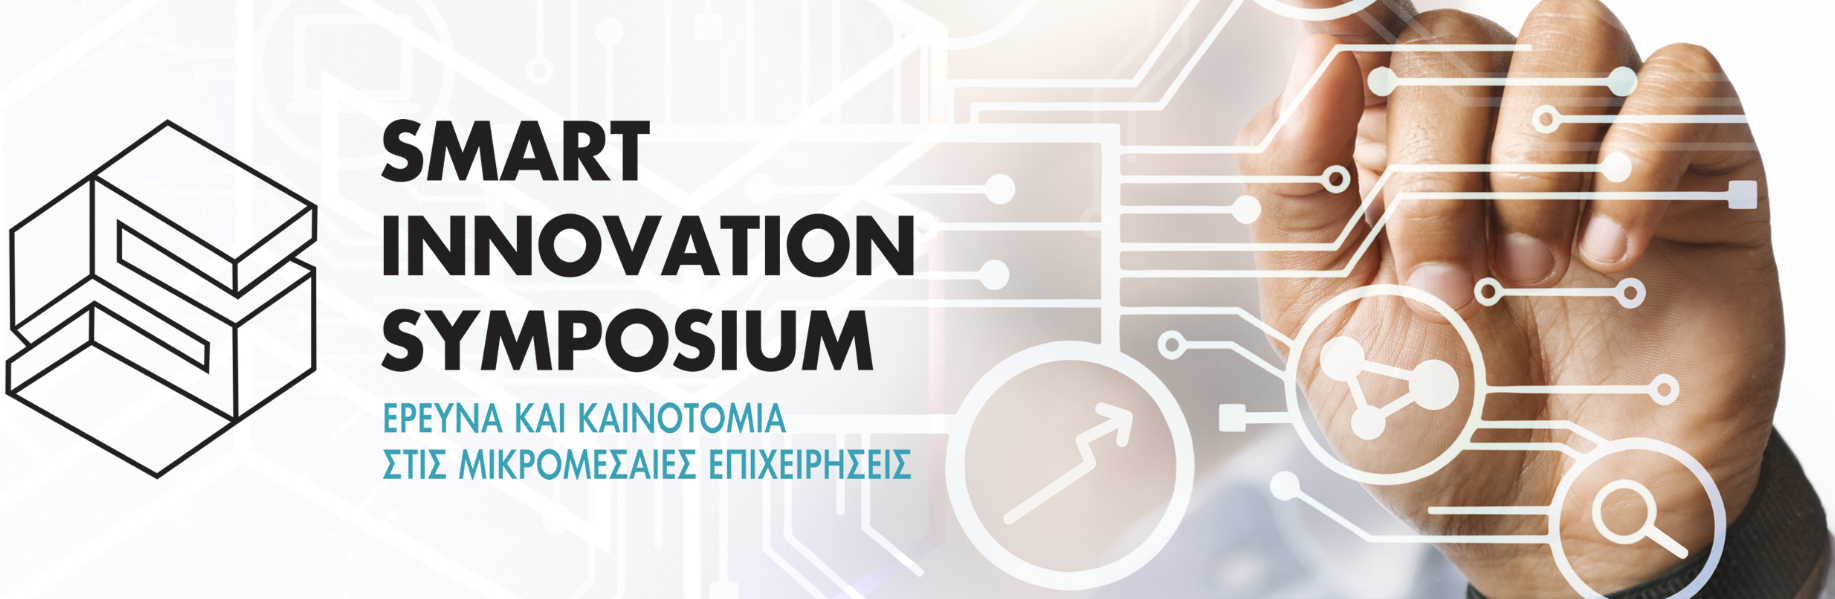 smart innovation symposium alt